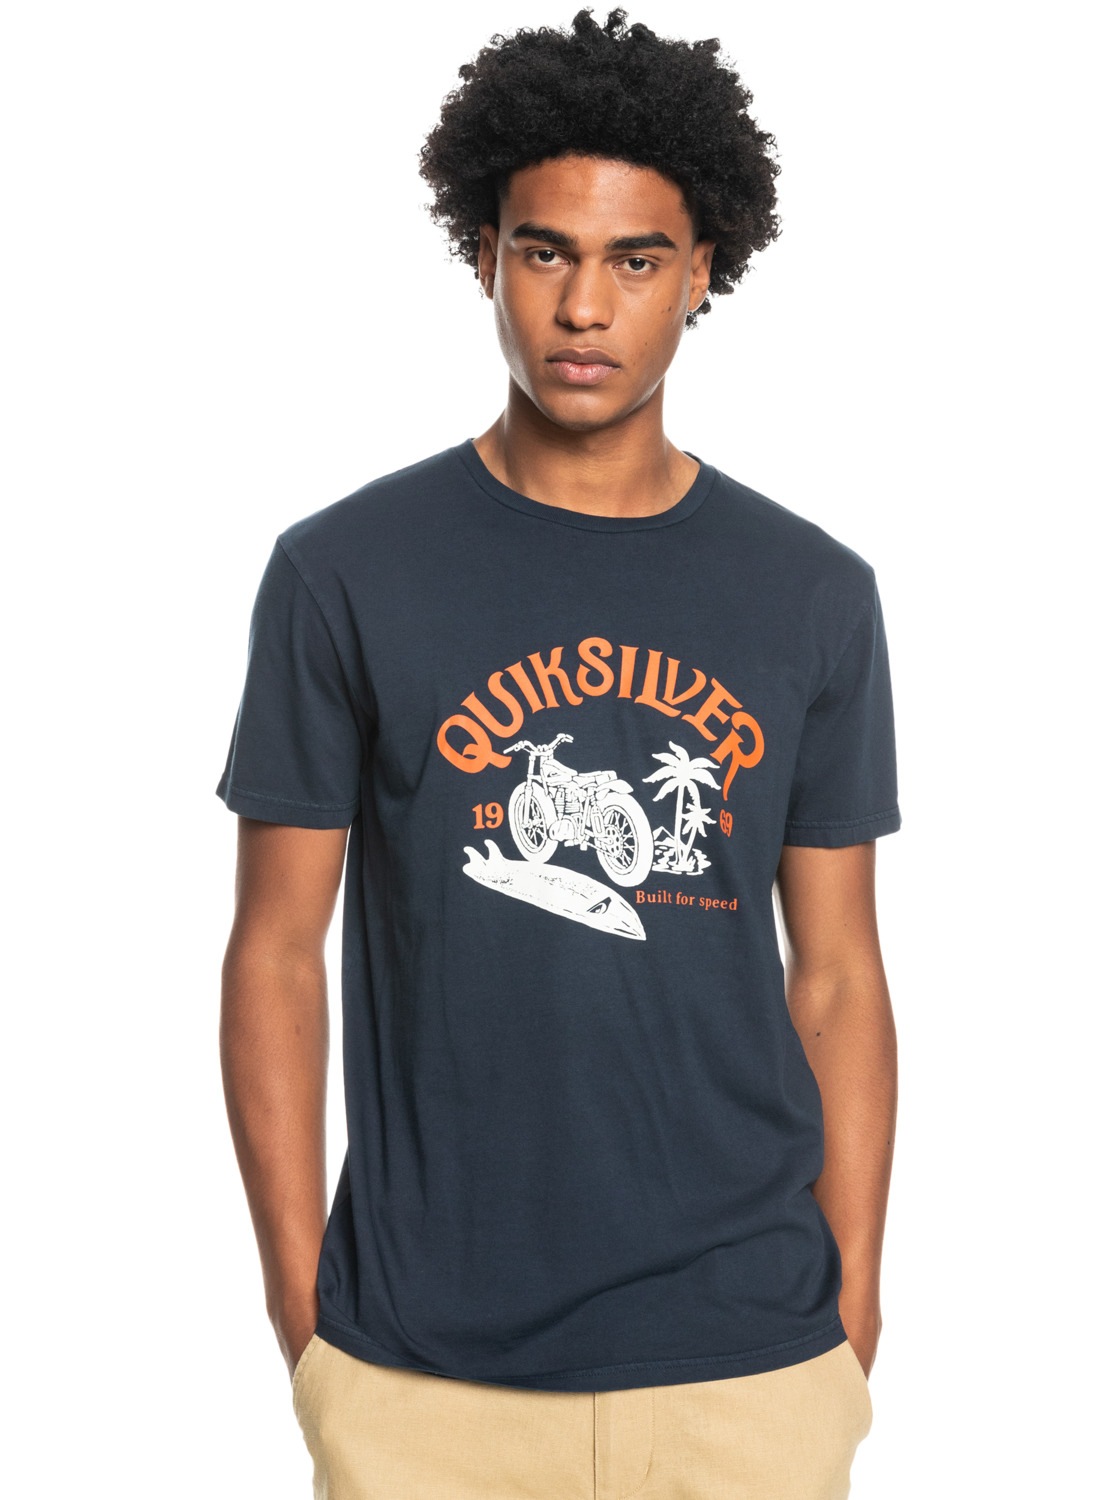 Quiksilver T-Shirt »Rush Hour« von Quiksilver